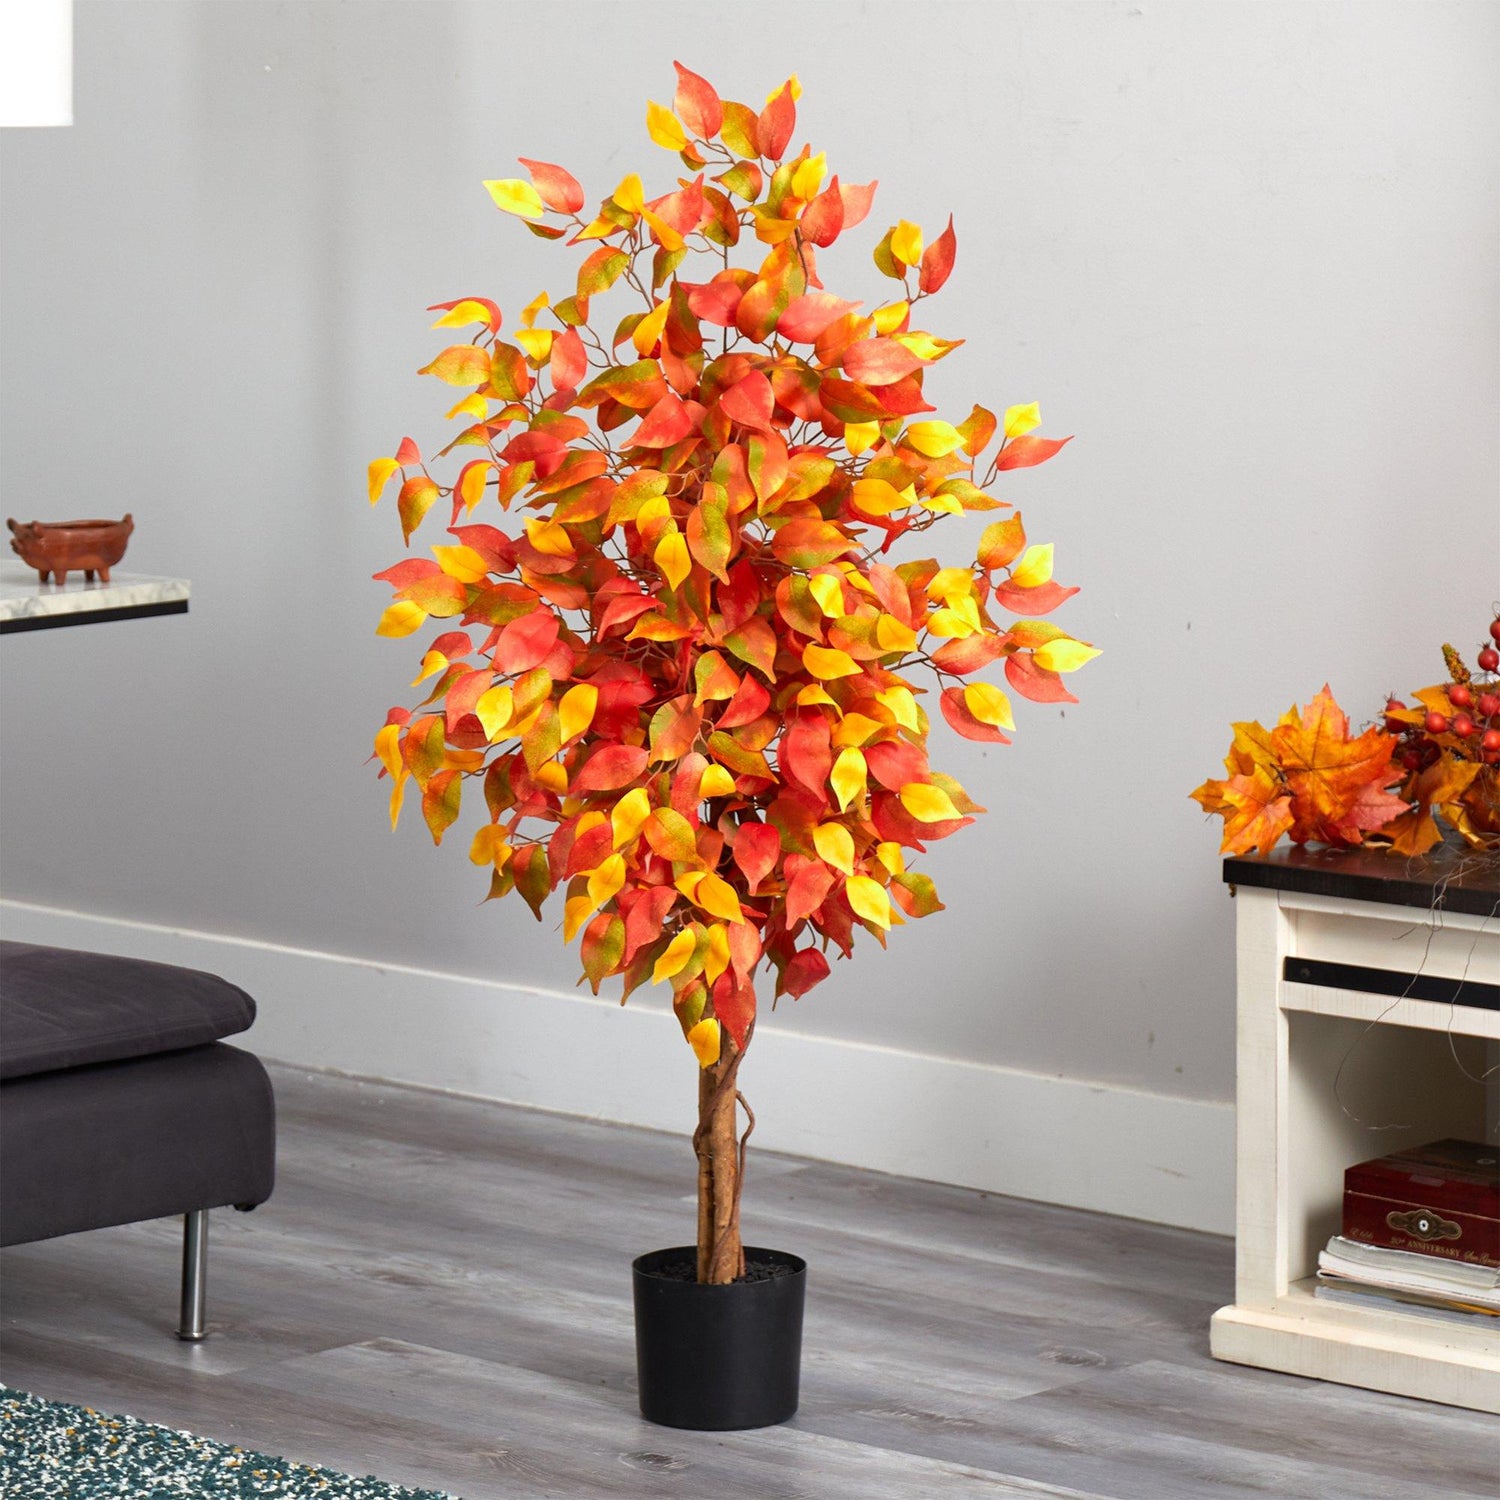 4’ Autumn Ficus Artificial Fall Tree